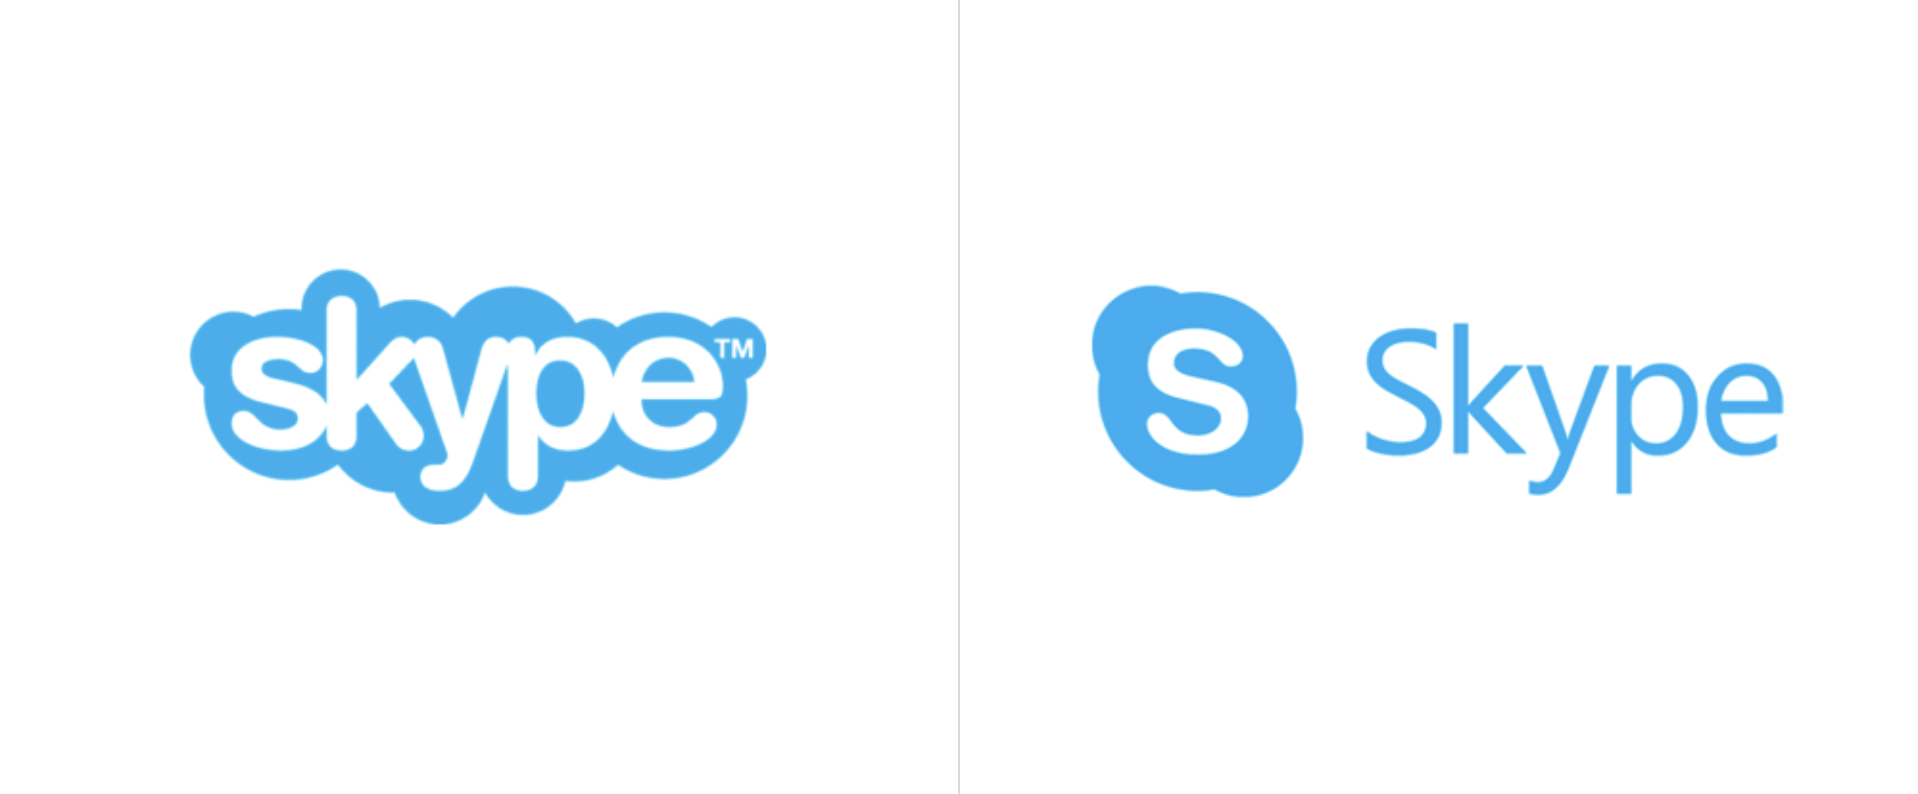 Old vs New Microsoft Logo - Microsoft introduces a new Skype logo ahead of the app's big ...